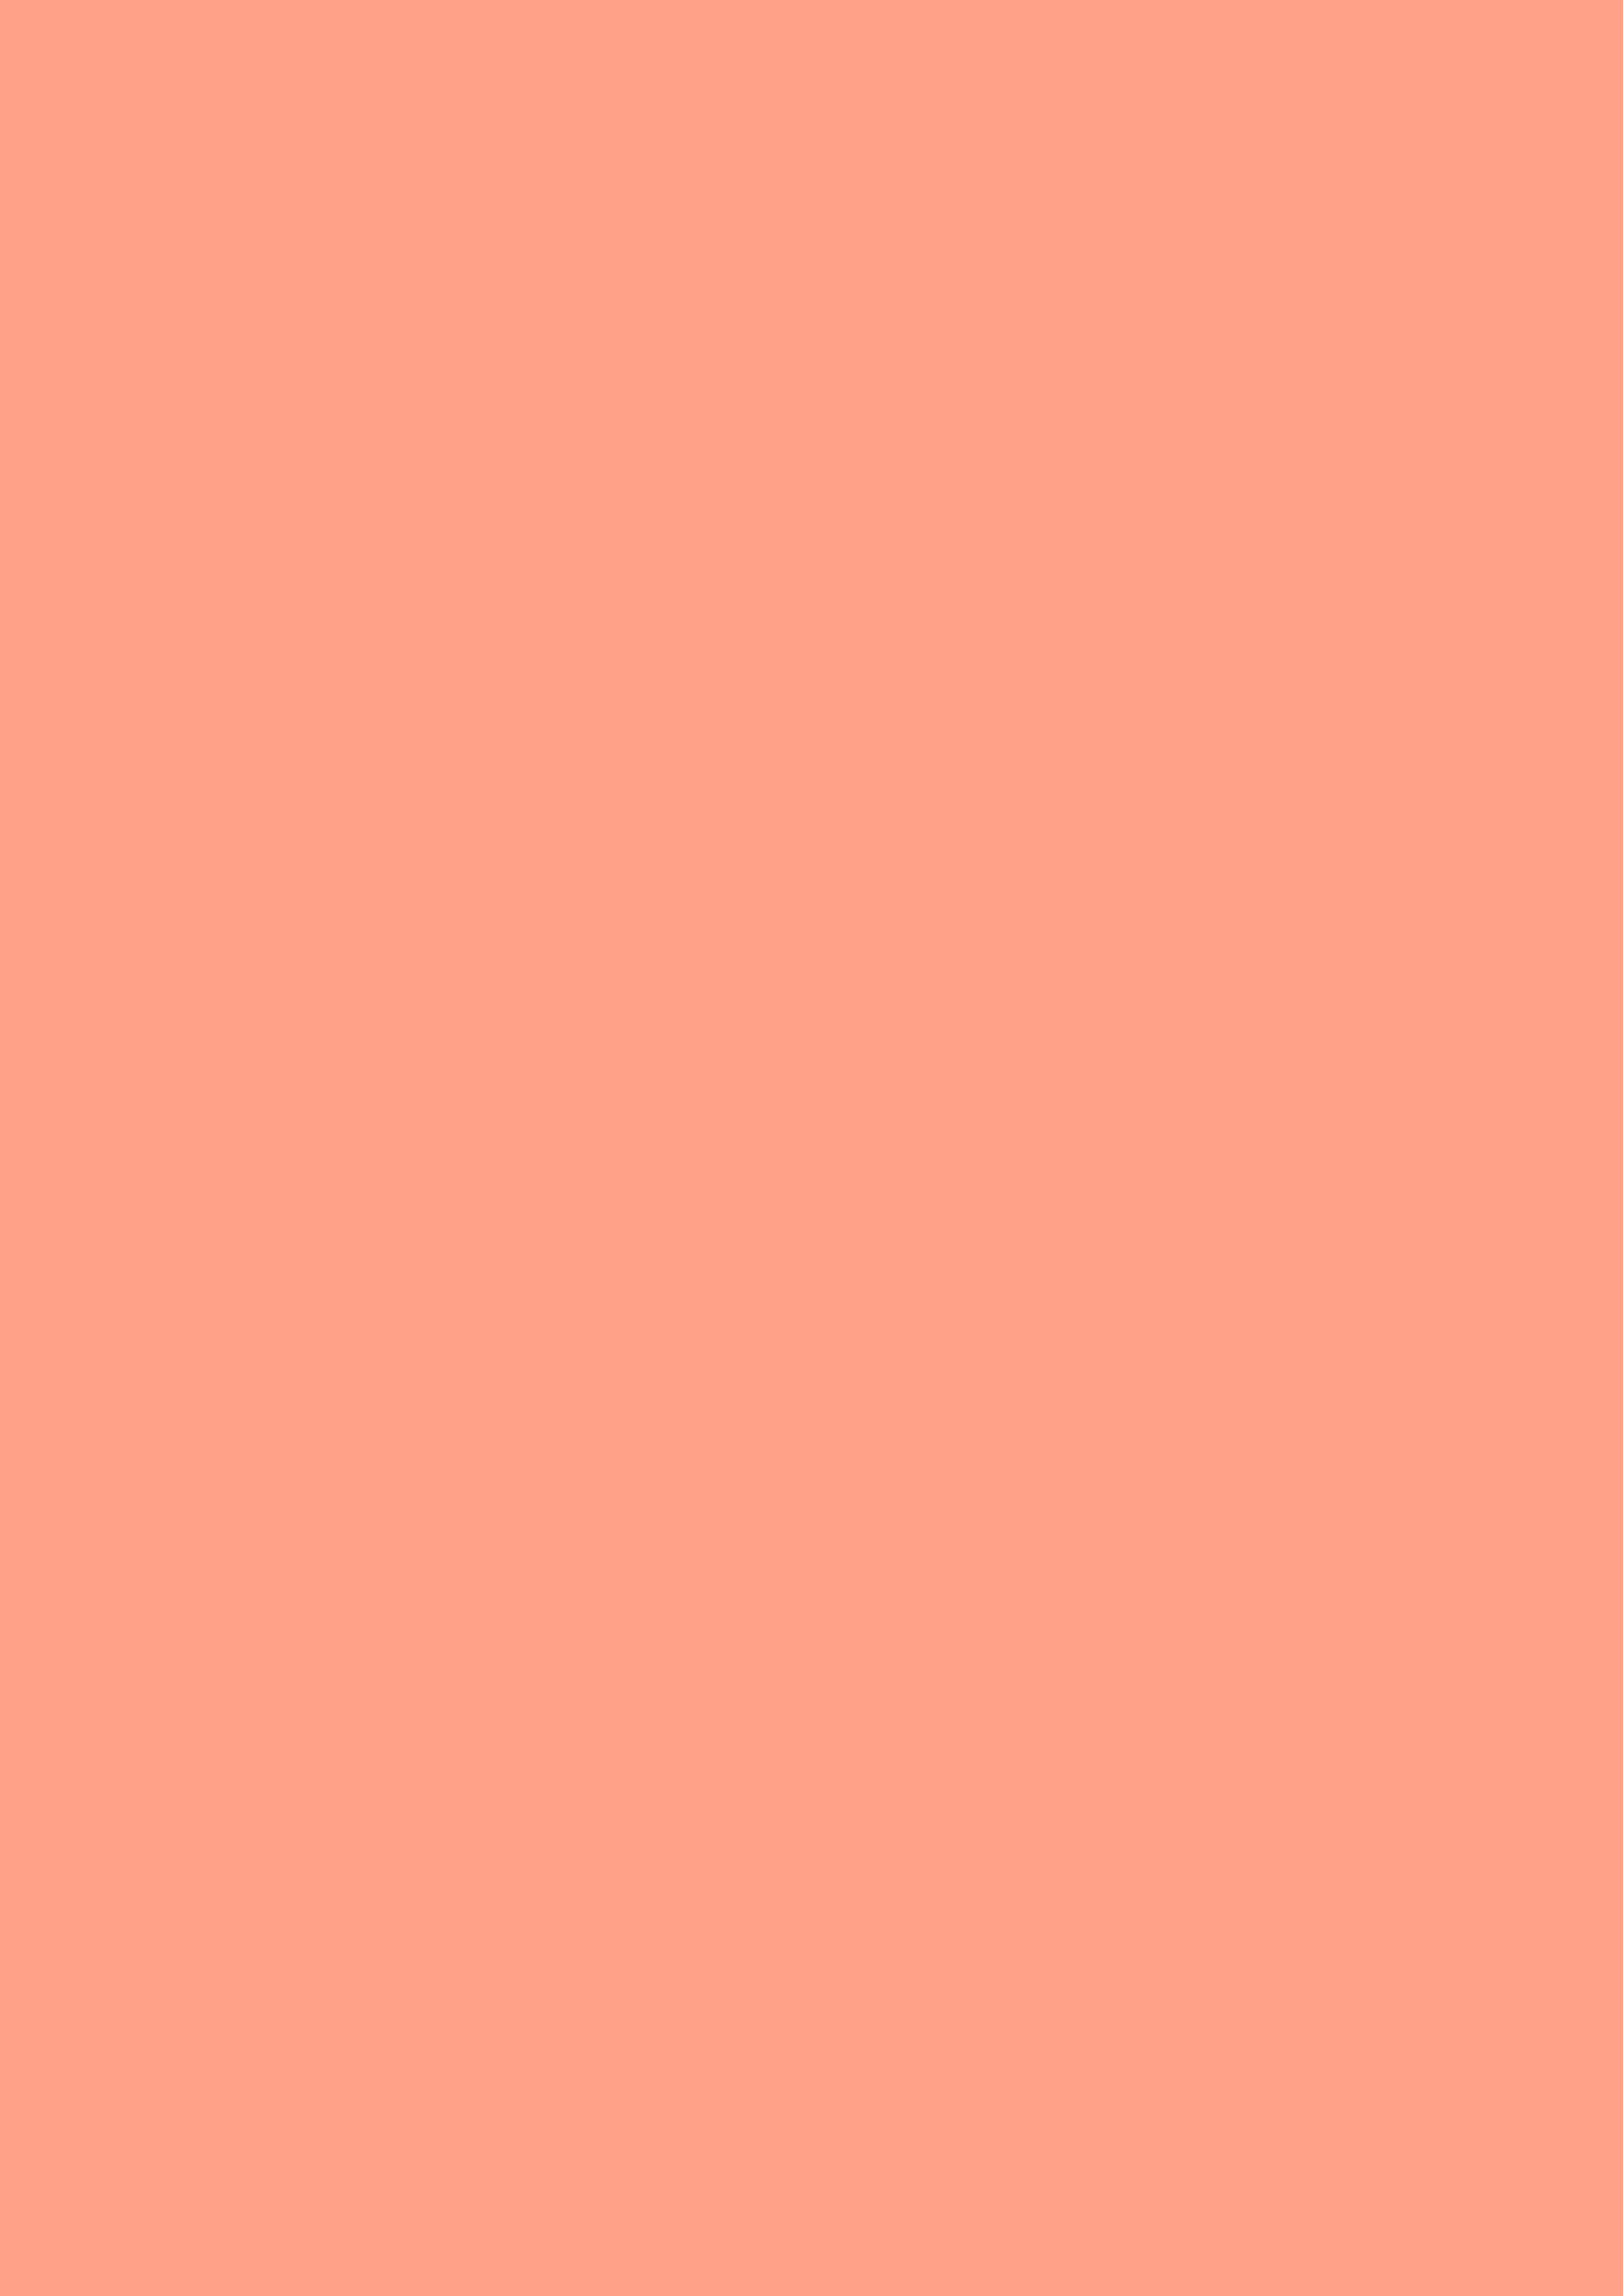 2480x3508 Vivid Tangerine Solid Color Background